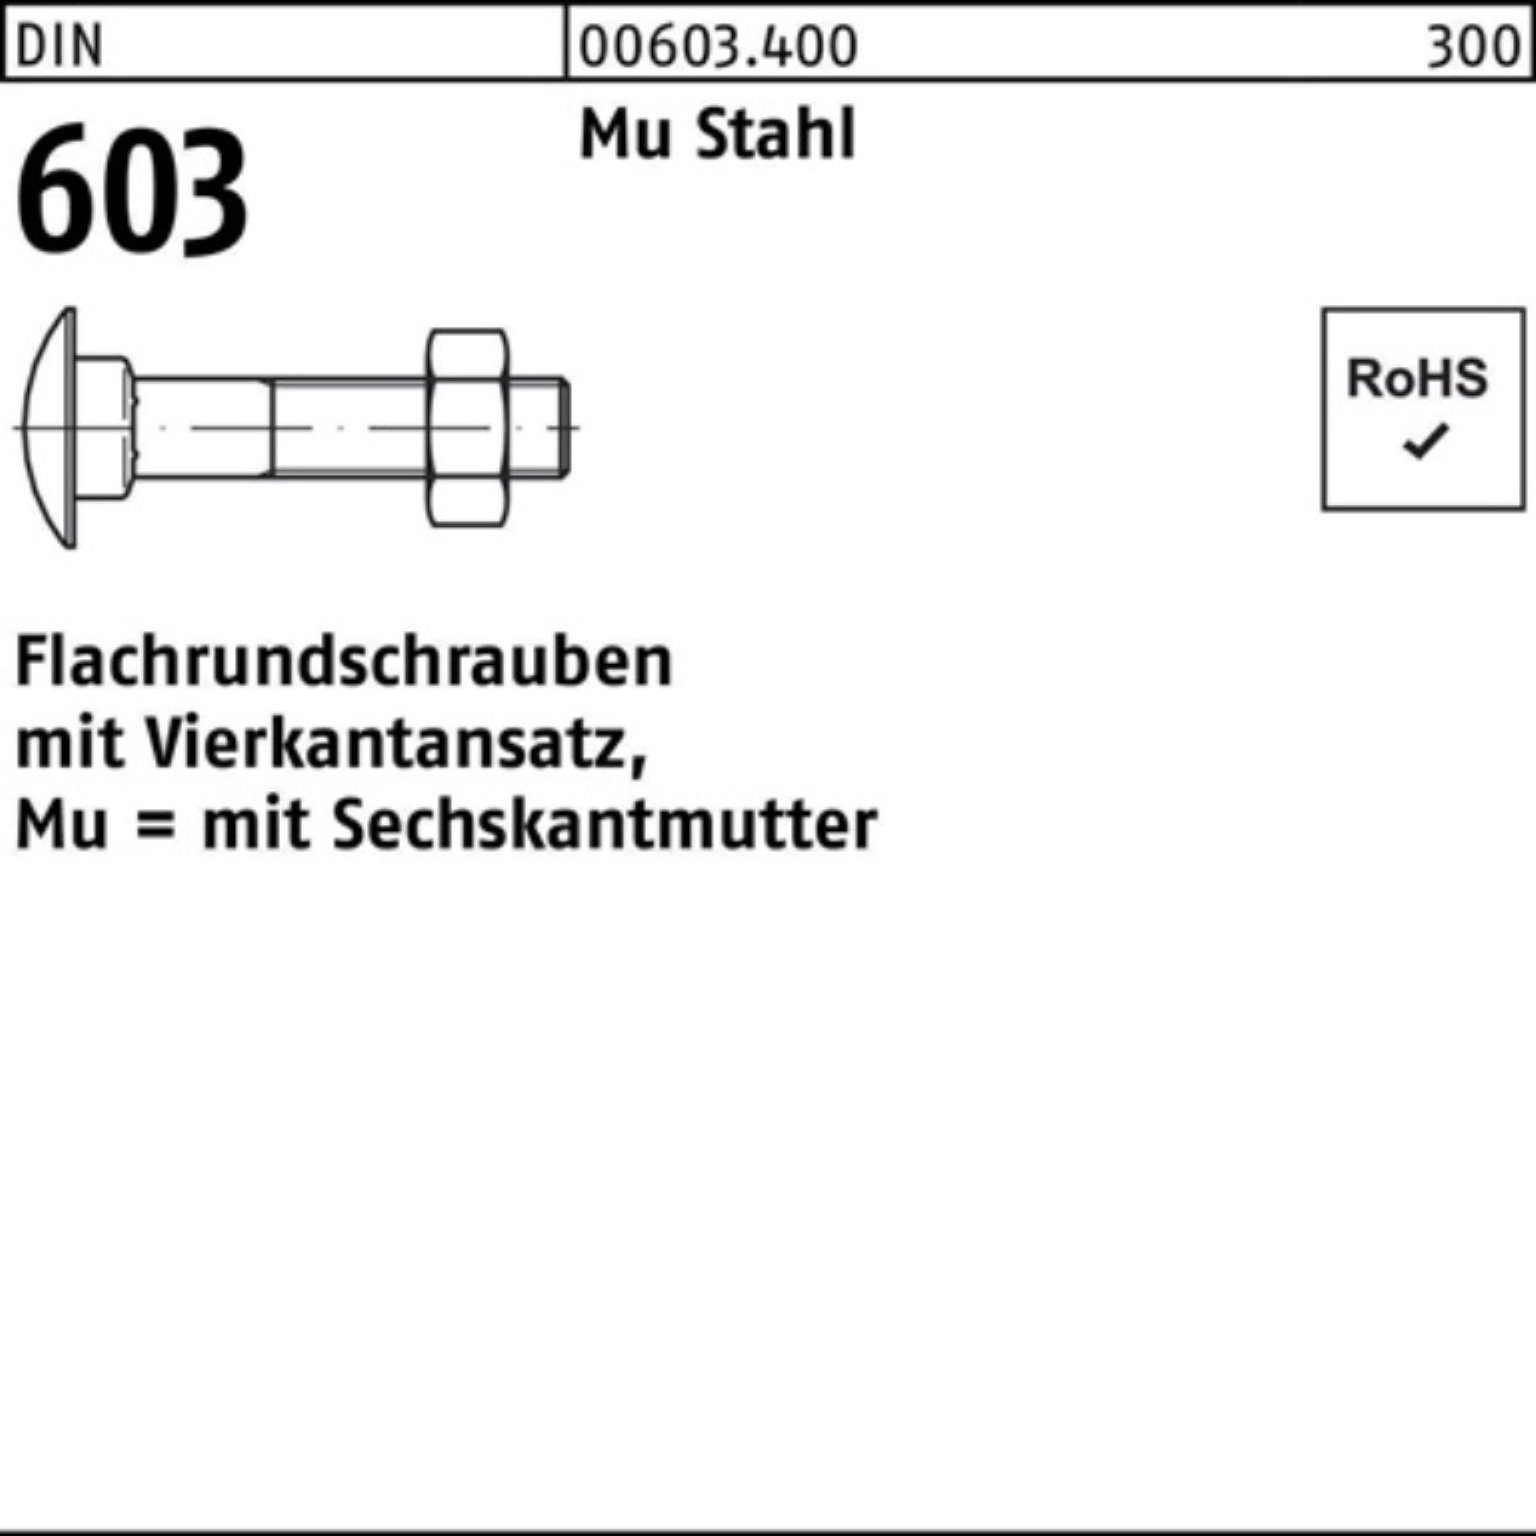 Reyher Schraube 100er Flachrundschraube Vierkantansatz/6-ktmutter 603 DIN M16x280 Pack